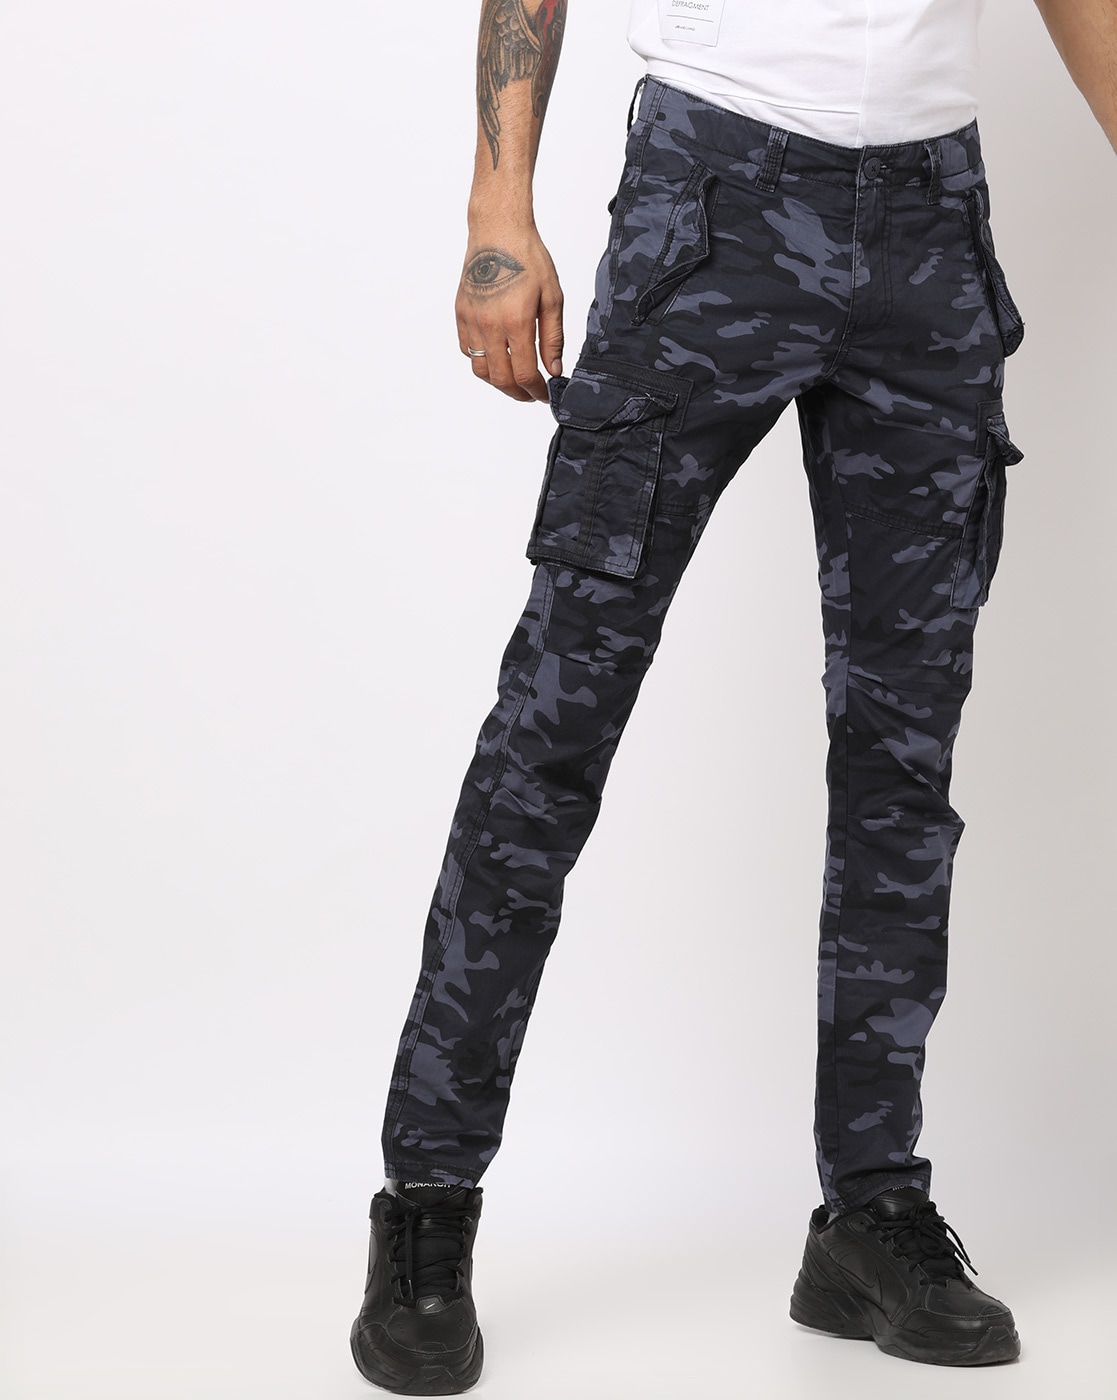 Men's Sky Blue Digital Camo BDU Cargo Pants - Tactical Military Style | eBay